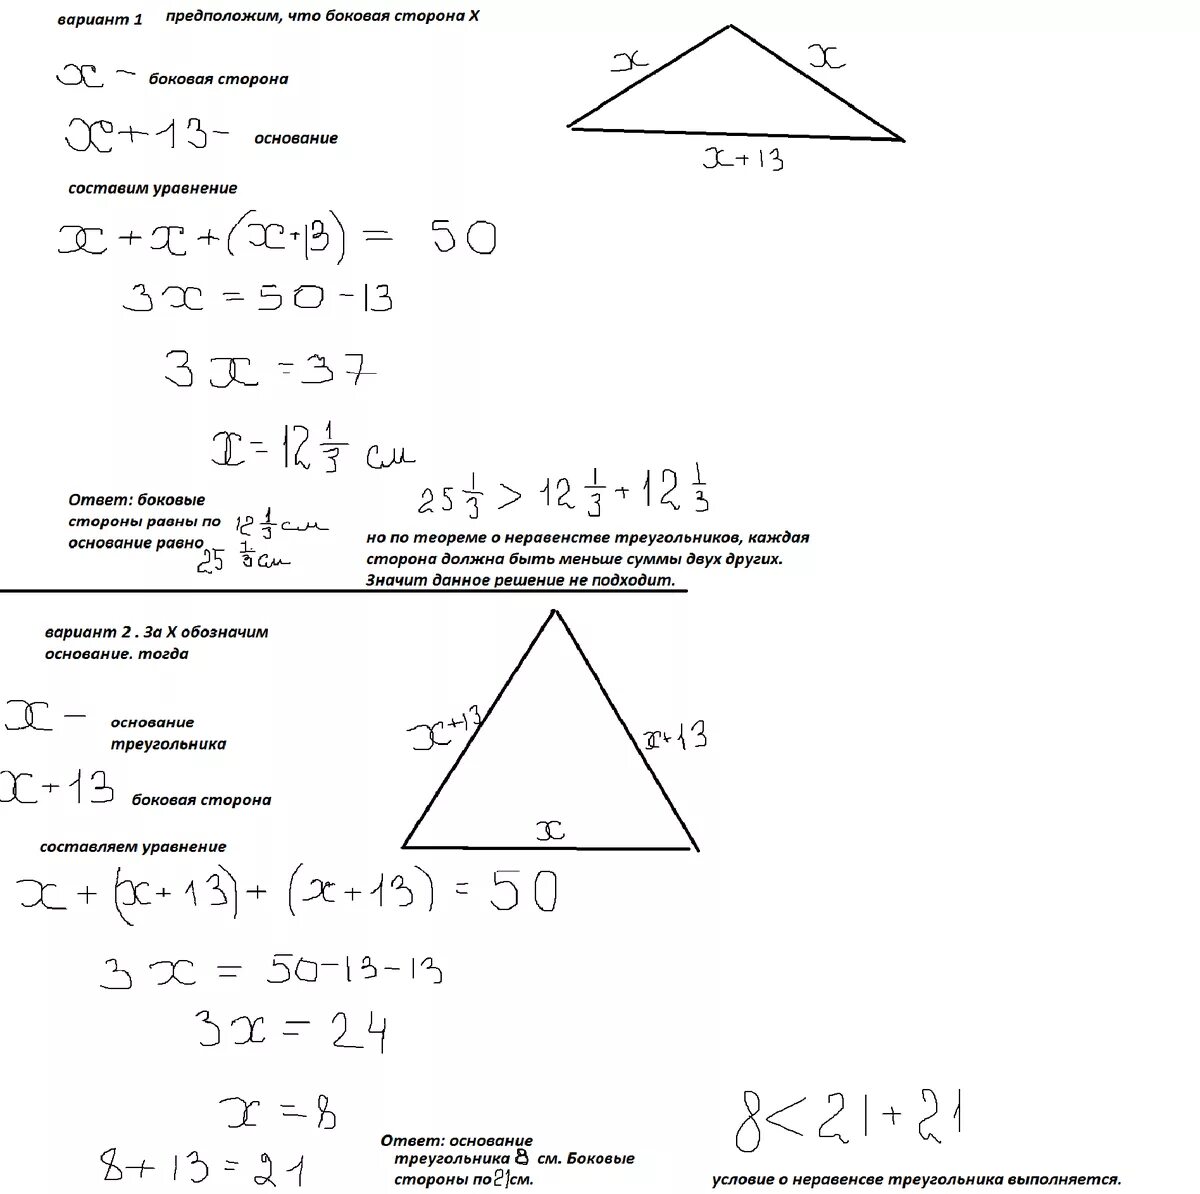 Периметр равнобедренного треугольника. Периметр равнобедренного треугольника равен. Периметр равнобедренного треугольника равен 50. Периметр равнобедренного тупоугольного треугольника.